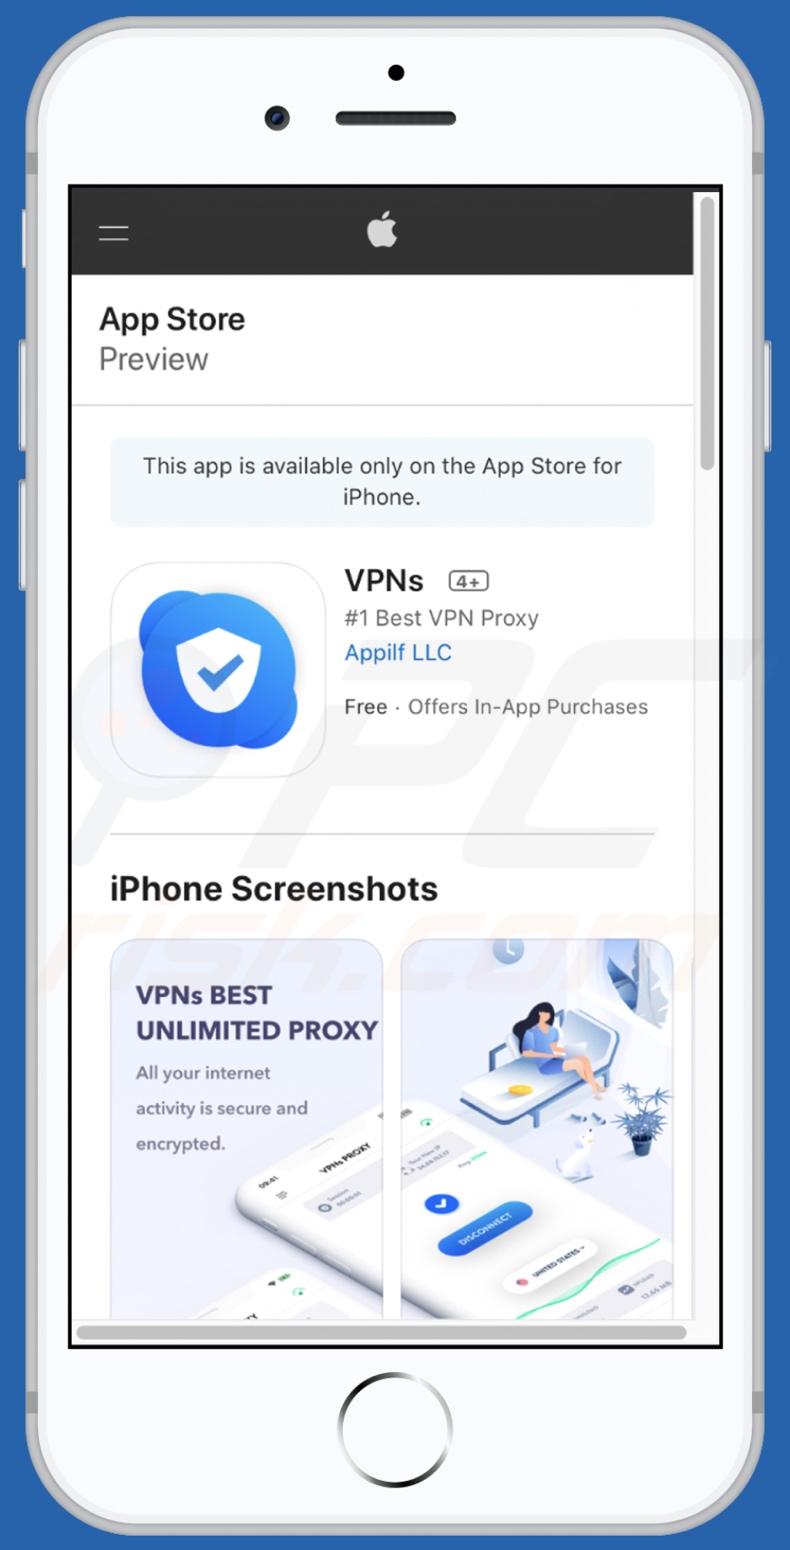 securityvpnapp[.]com scam promoted dubious app